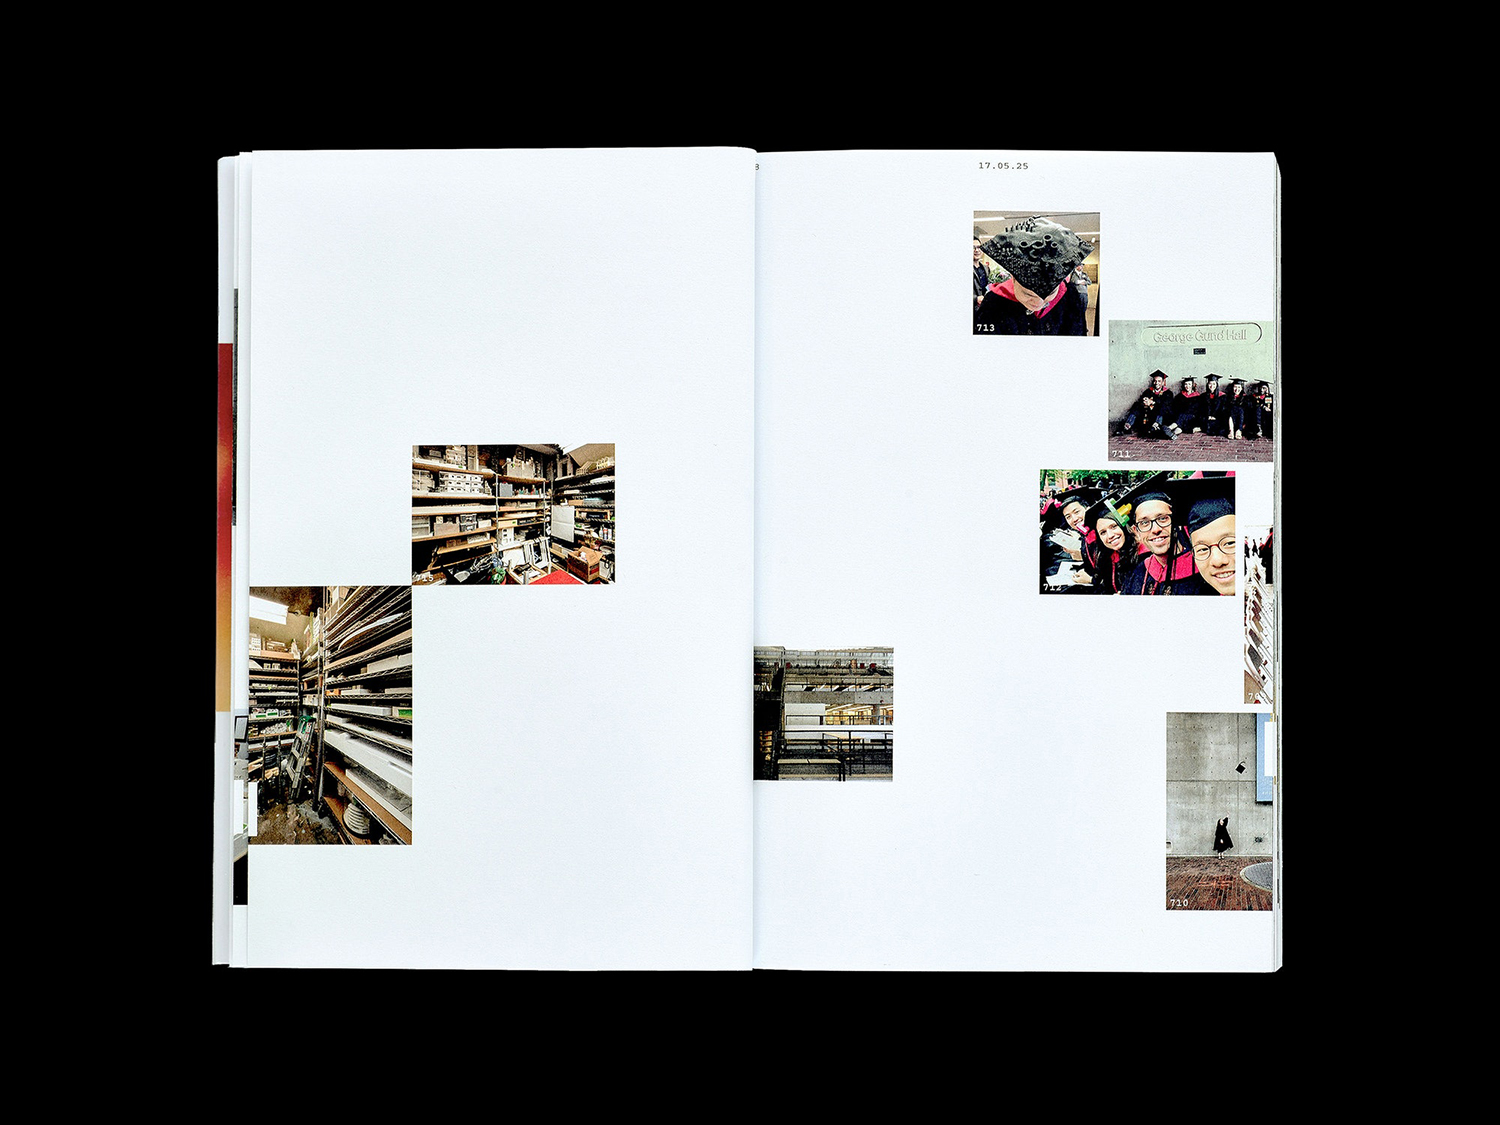 Platform 10: Live Feed a book designed by Pentagram partner Natasha Jen for the Harvard University Graduate School of Design